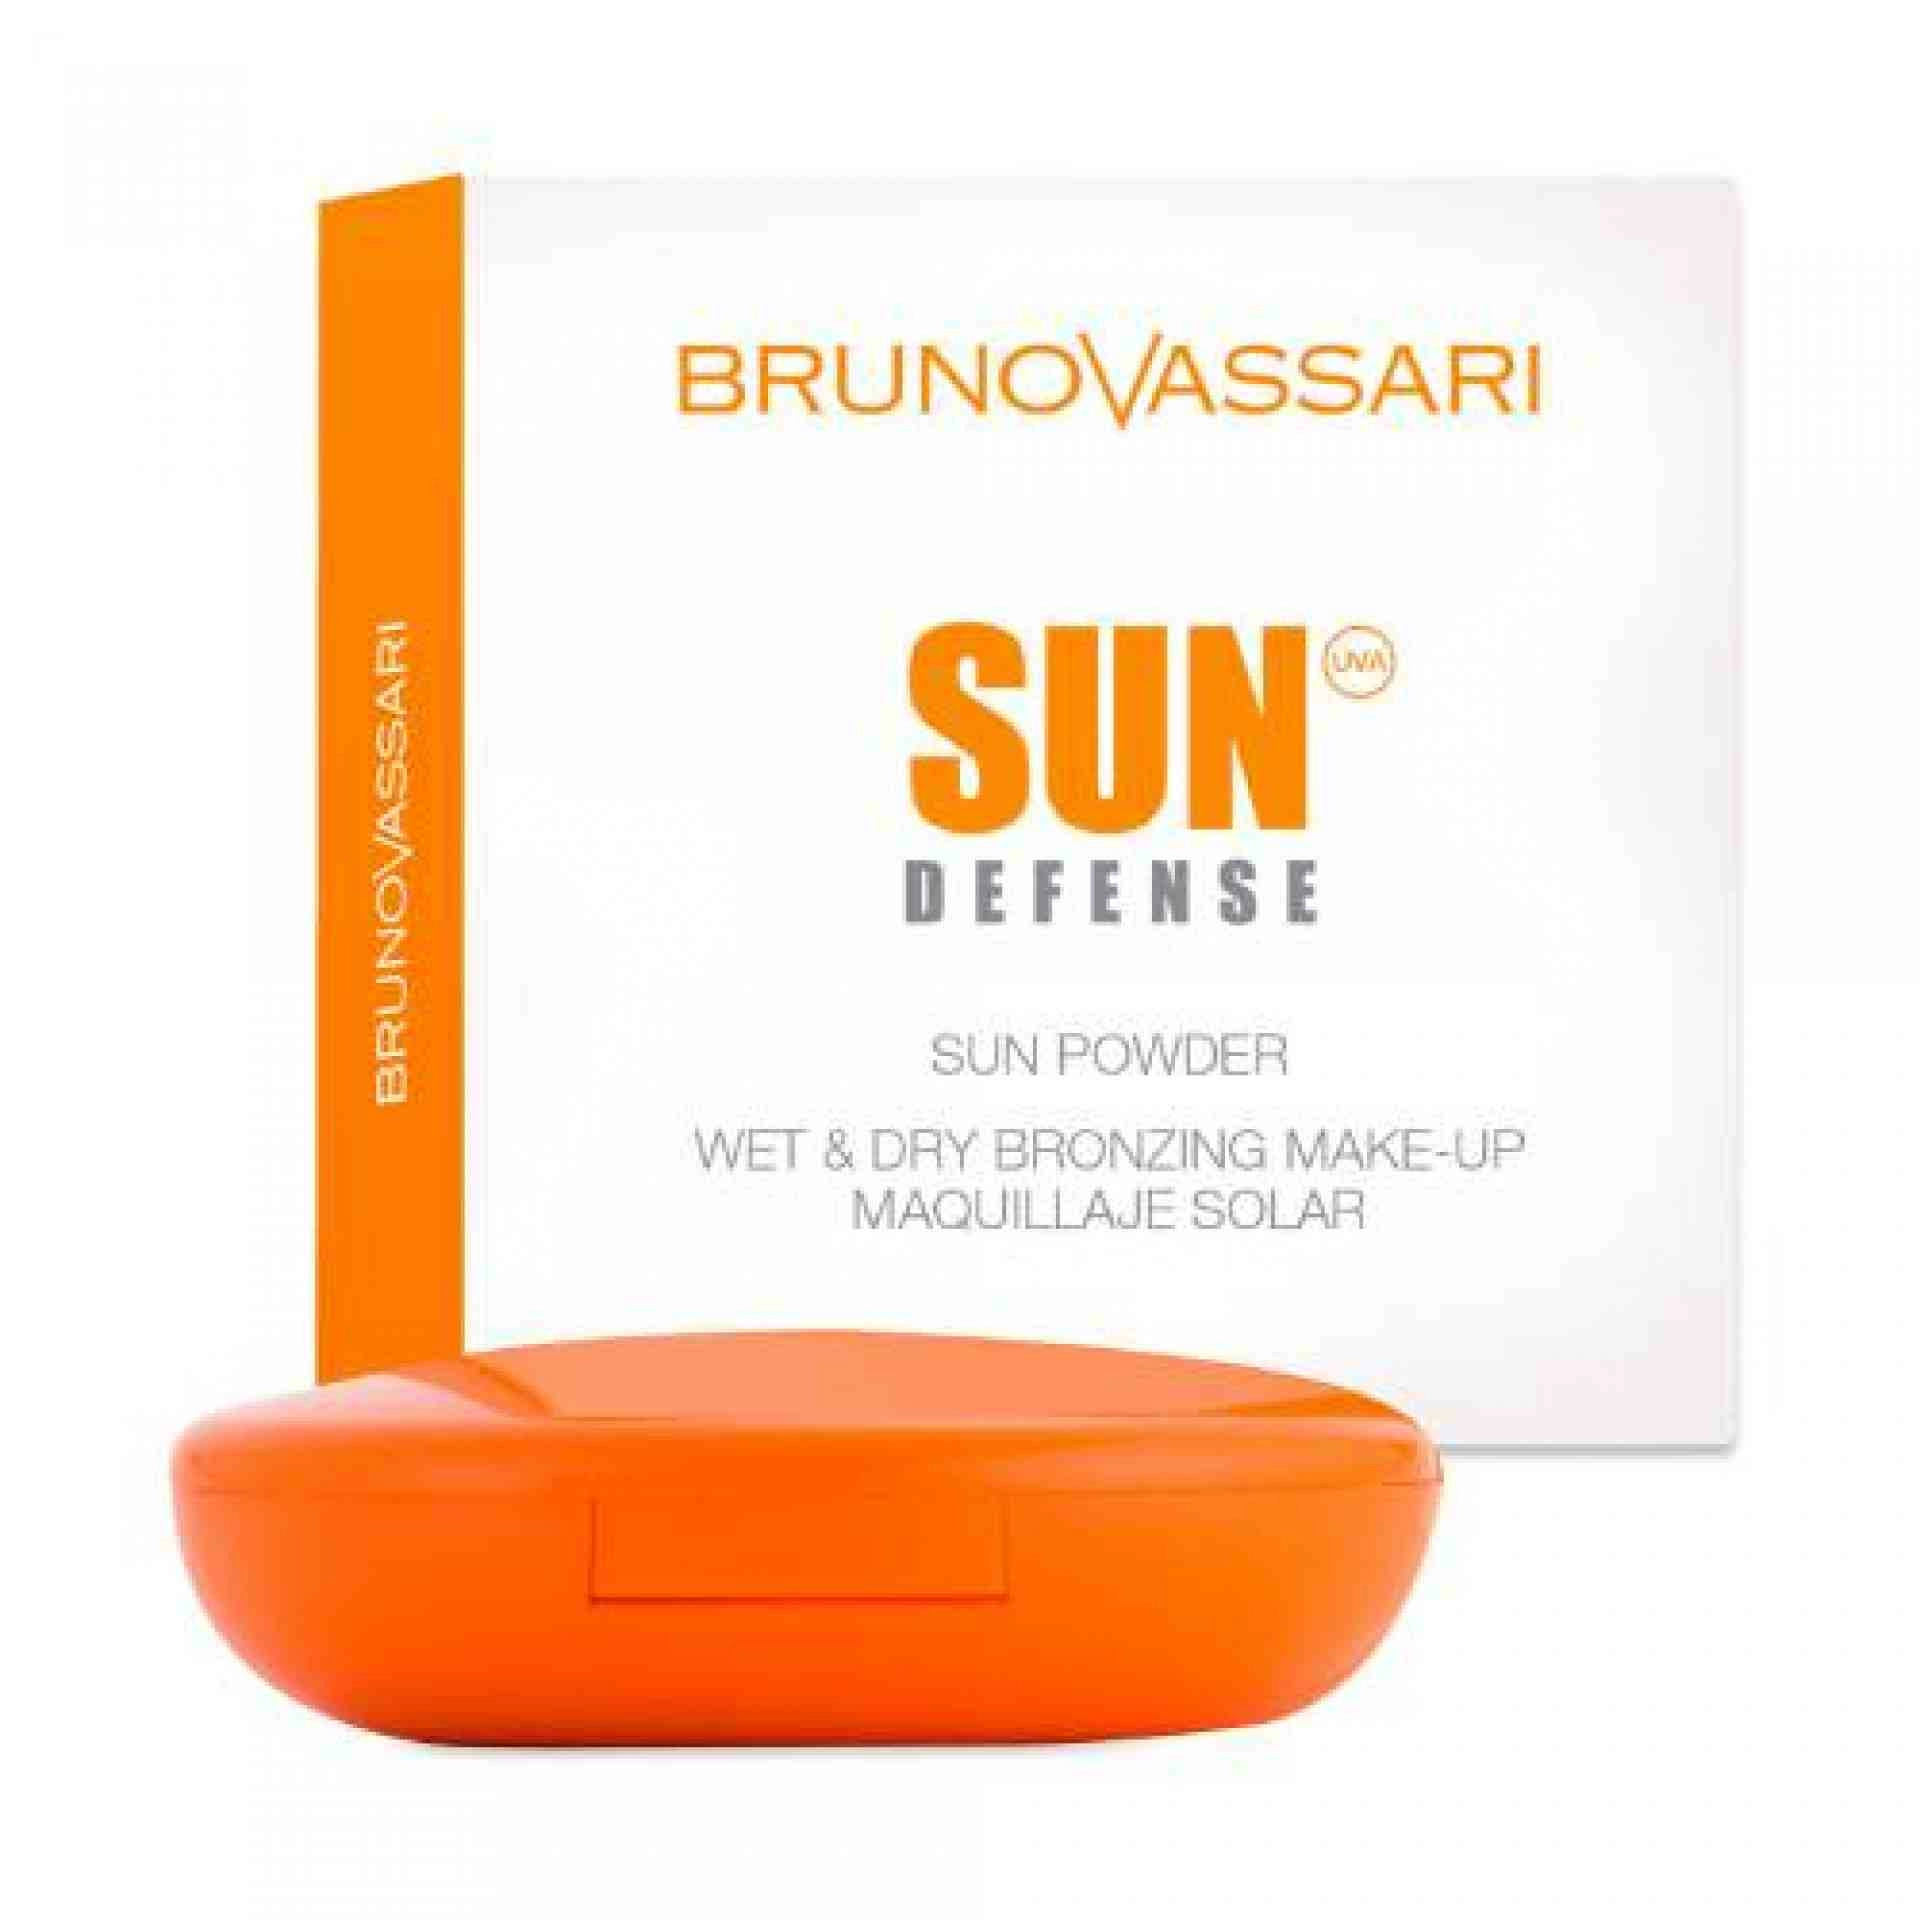 Sun Powder | Maquillaje solar 10gr - Sun Defense - Bruno Vassari ®